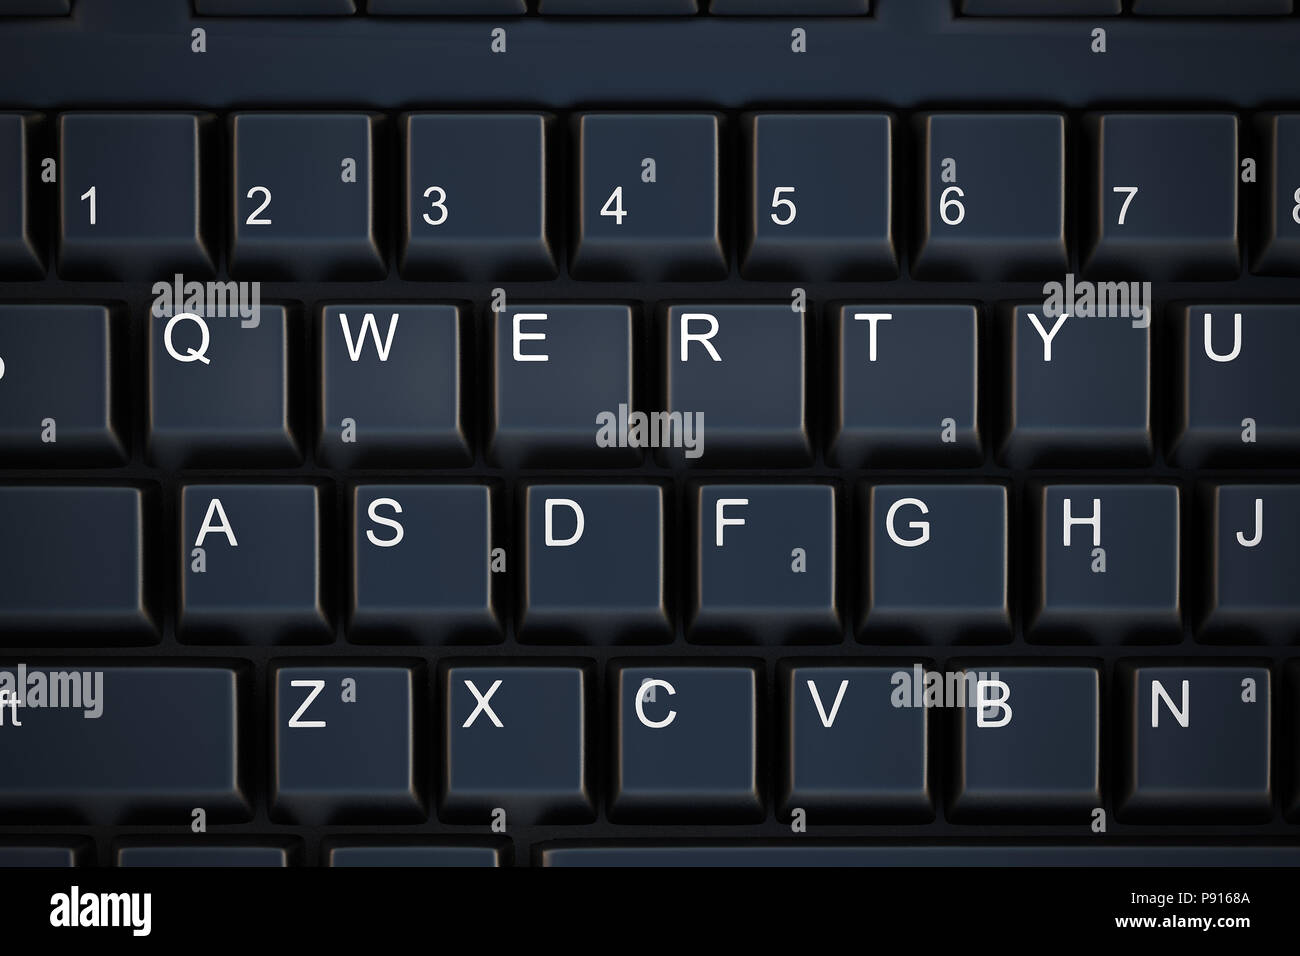 Qwerty keyboard keys. 3d render Stock Photo - Alamy